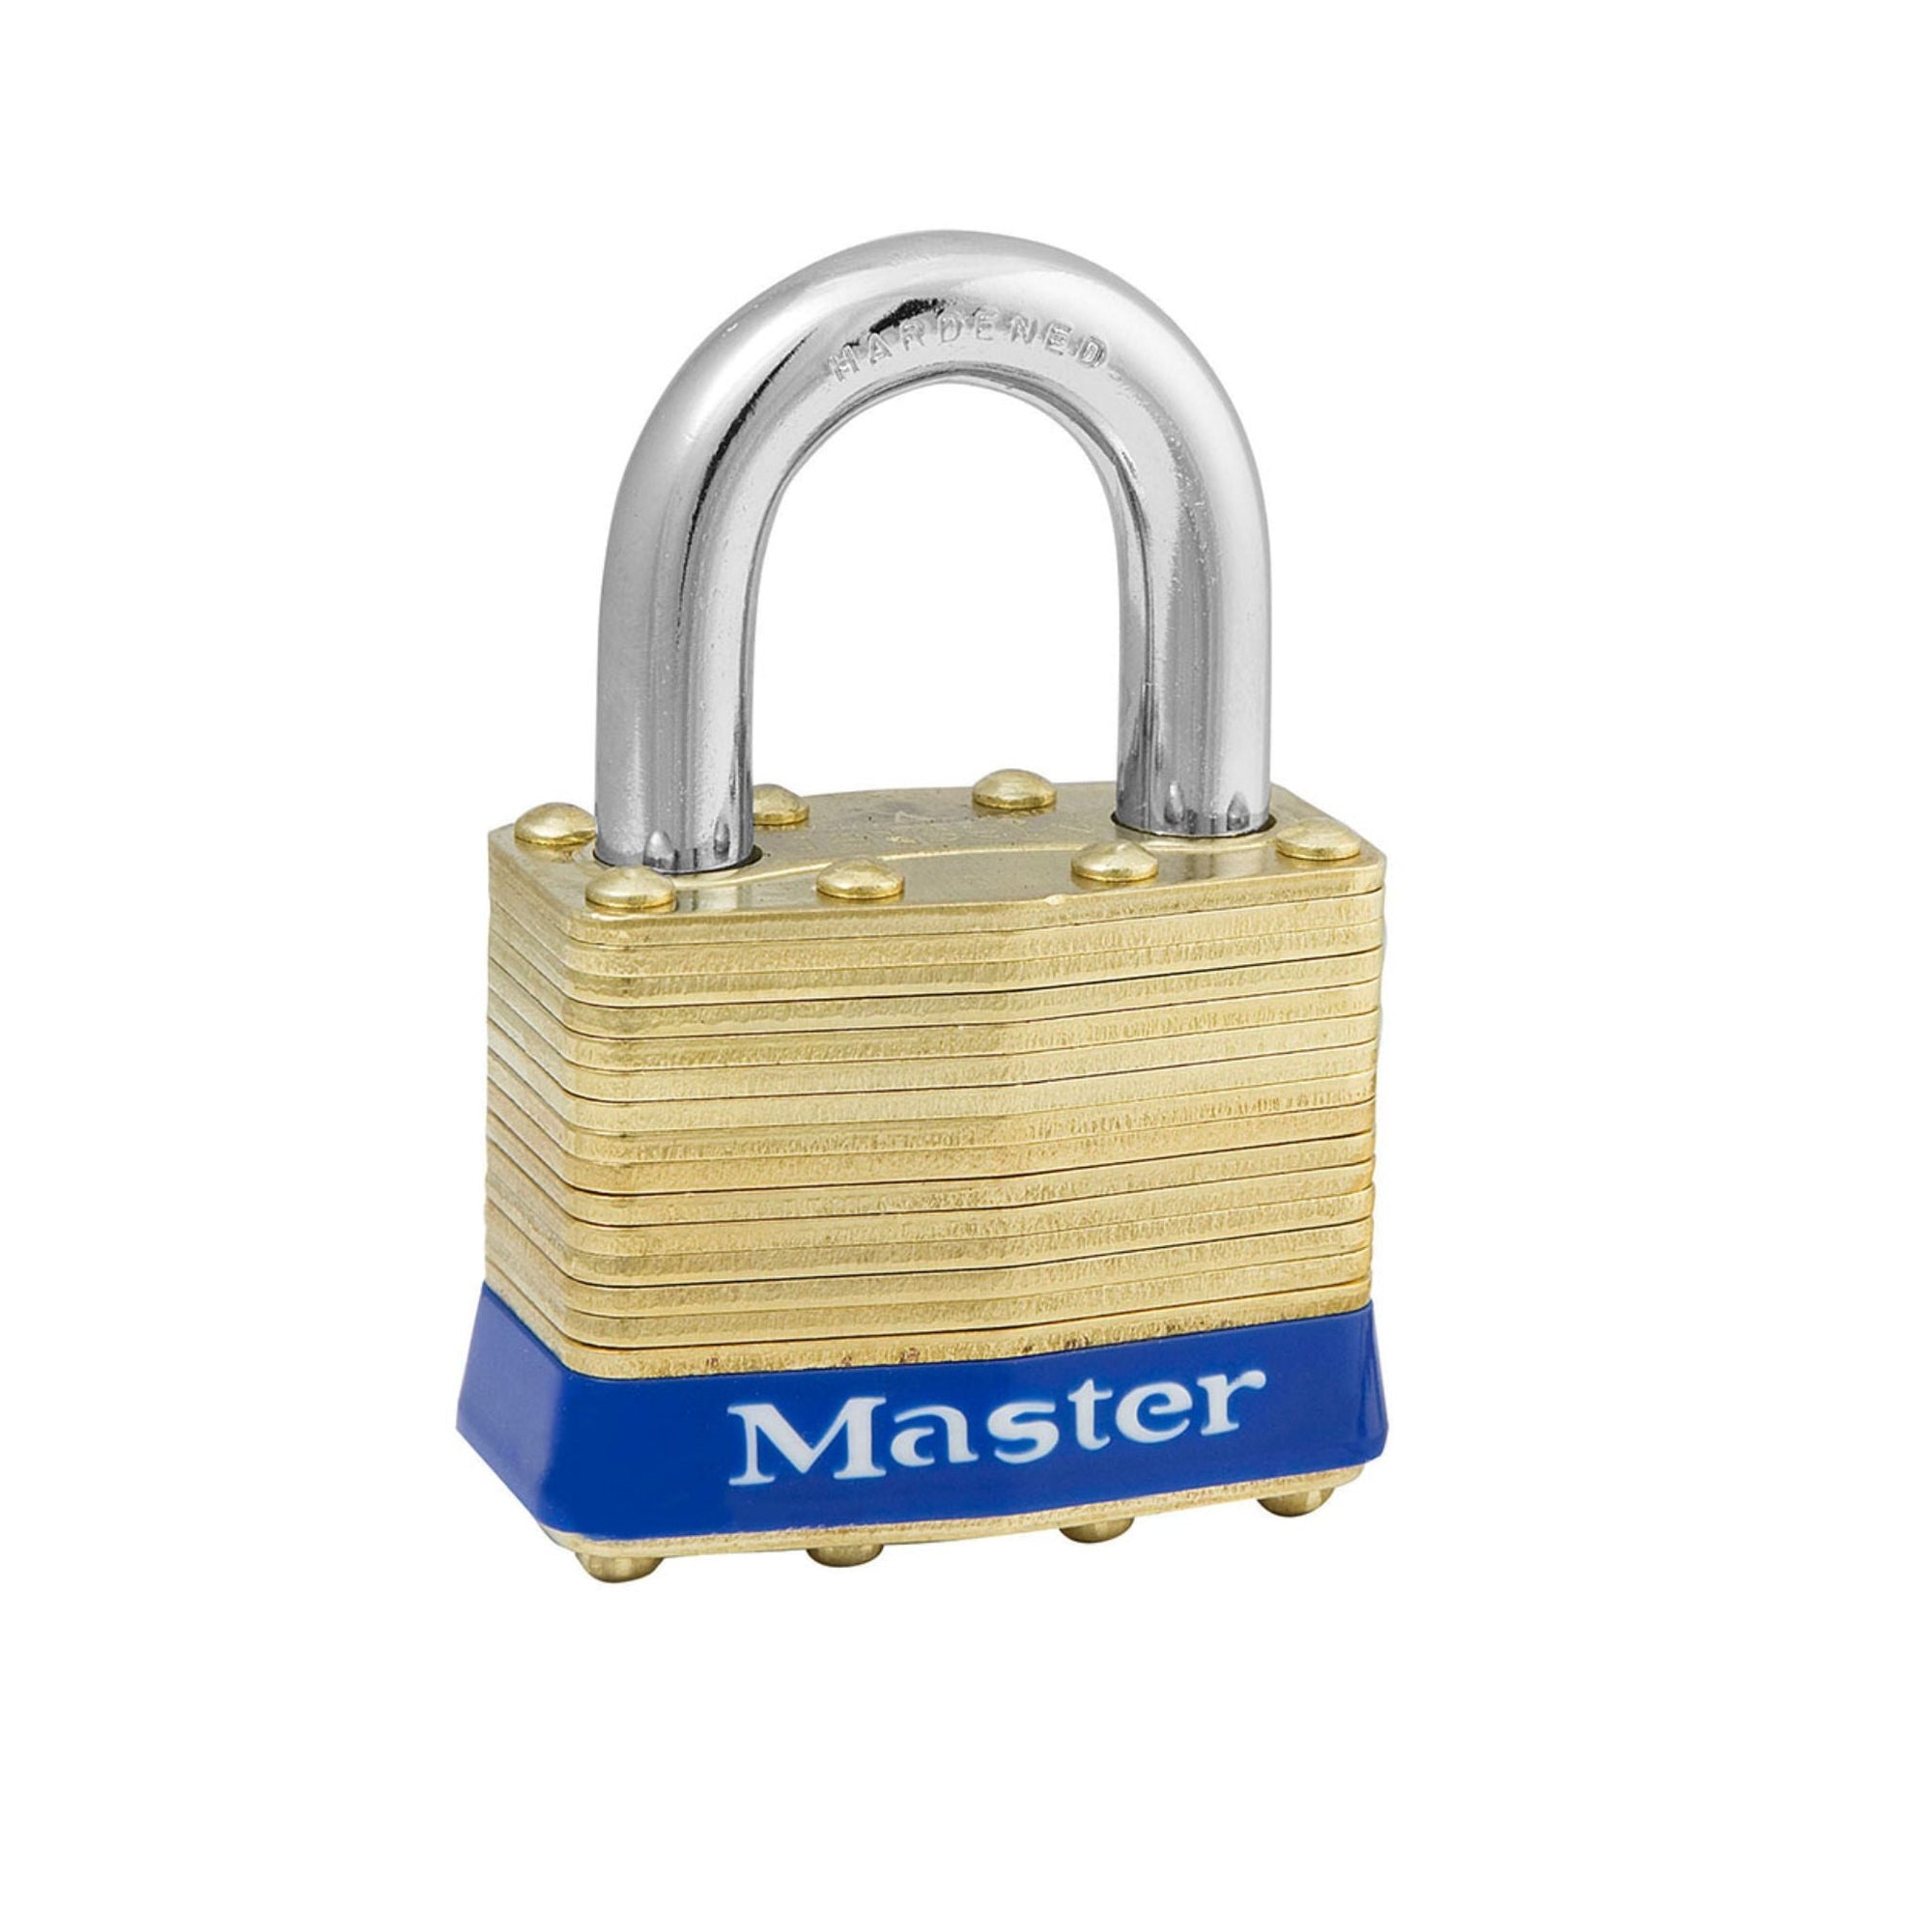 Master Lock 2KA 0303 Lock Laminated brass No. 2 Series Padlock Keyed to Match Existing Key Number KA0303 - The Lock Source